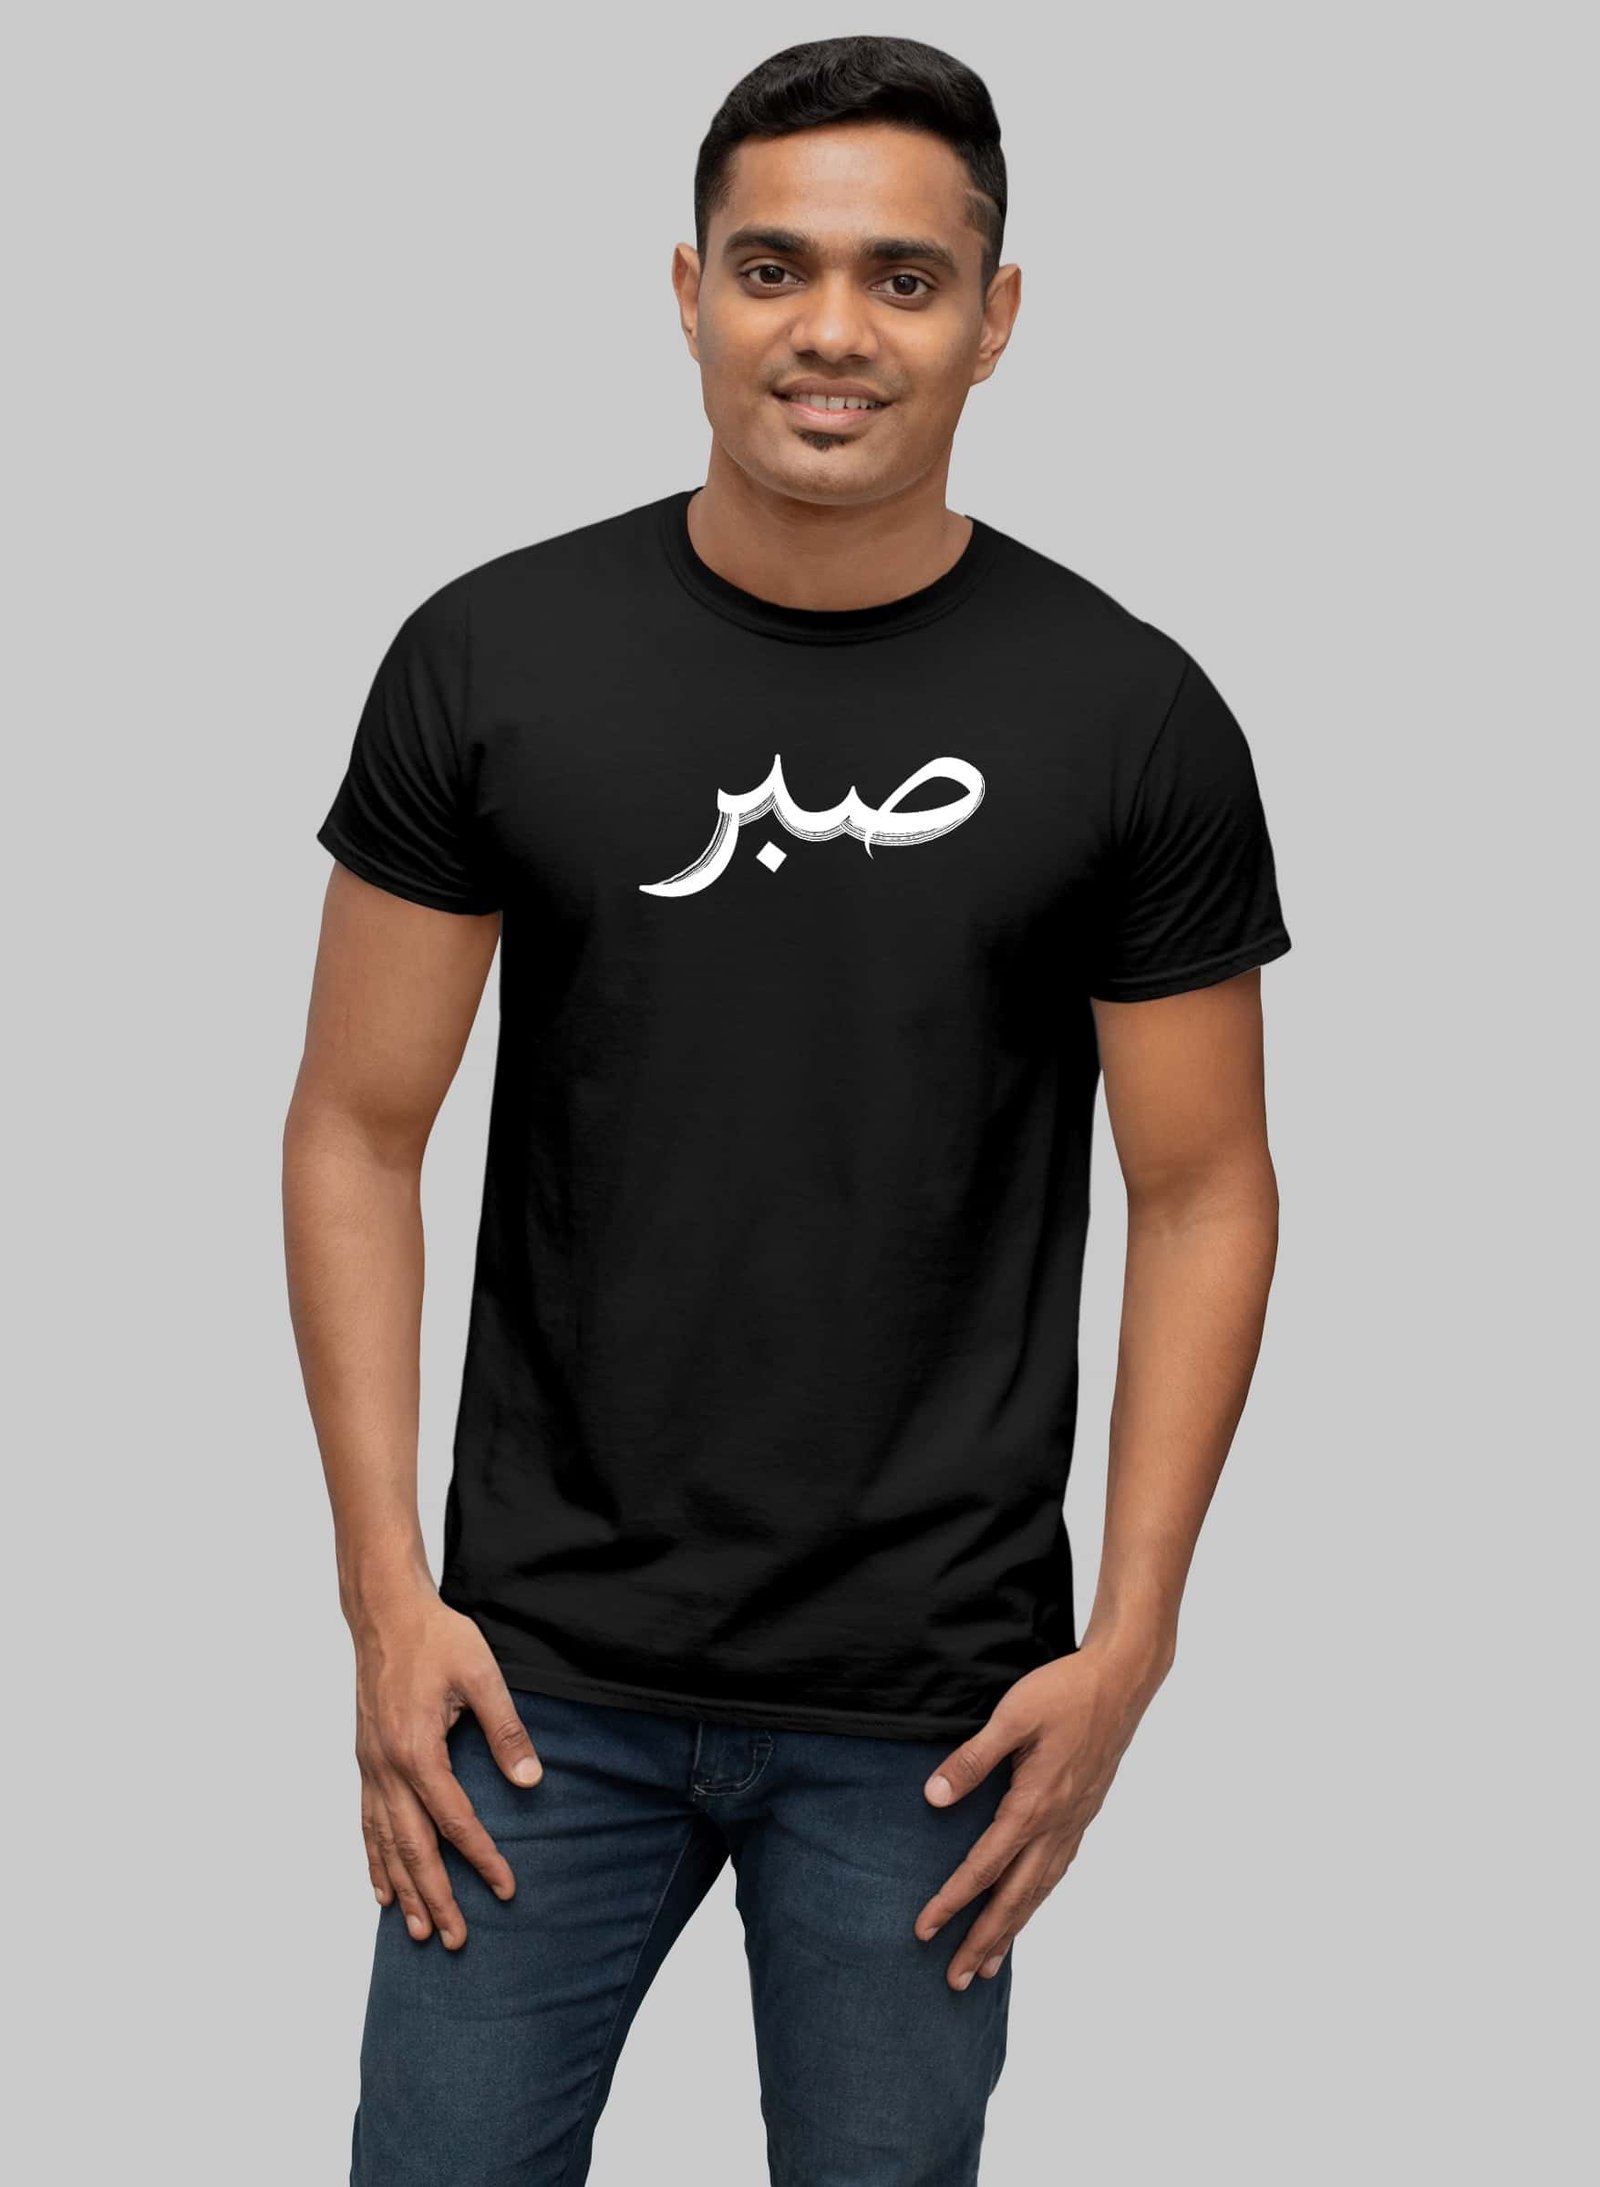 Sabr : Half Sleeve T-shirt | The Ghazi Store